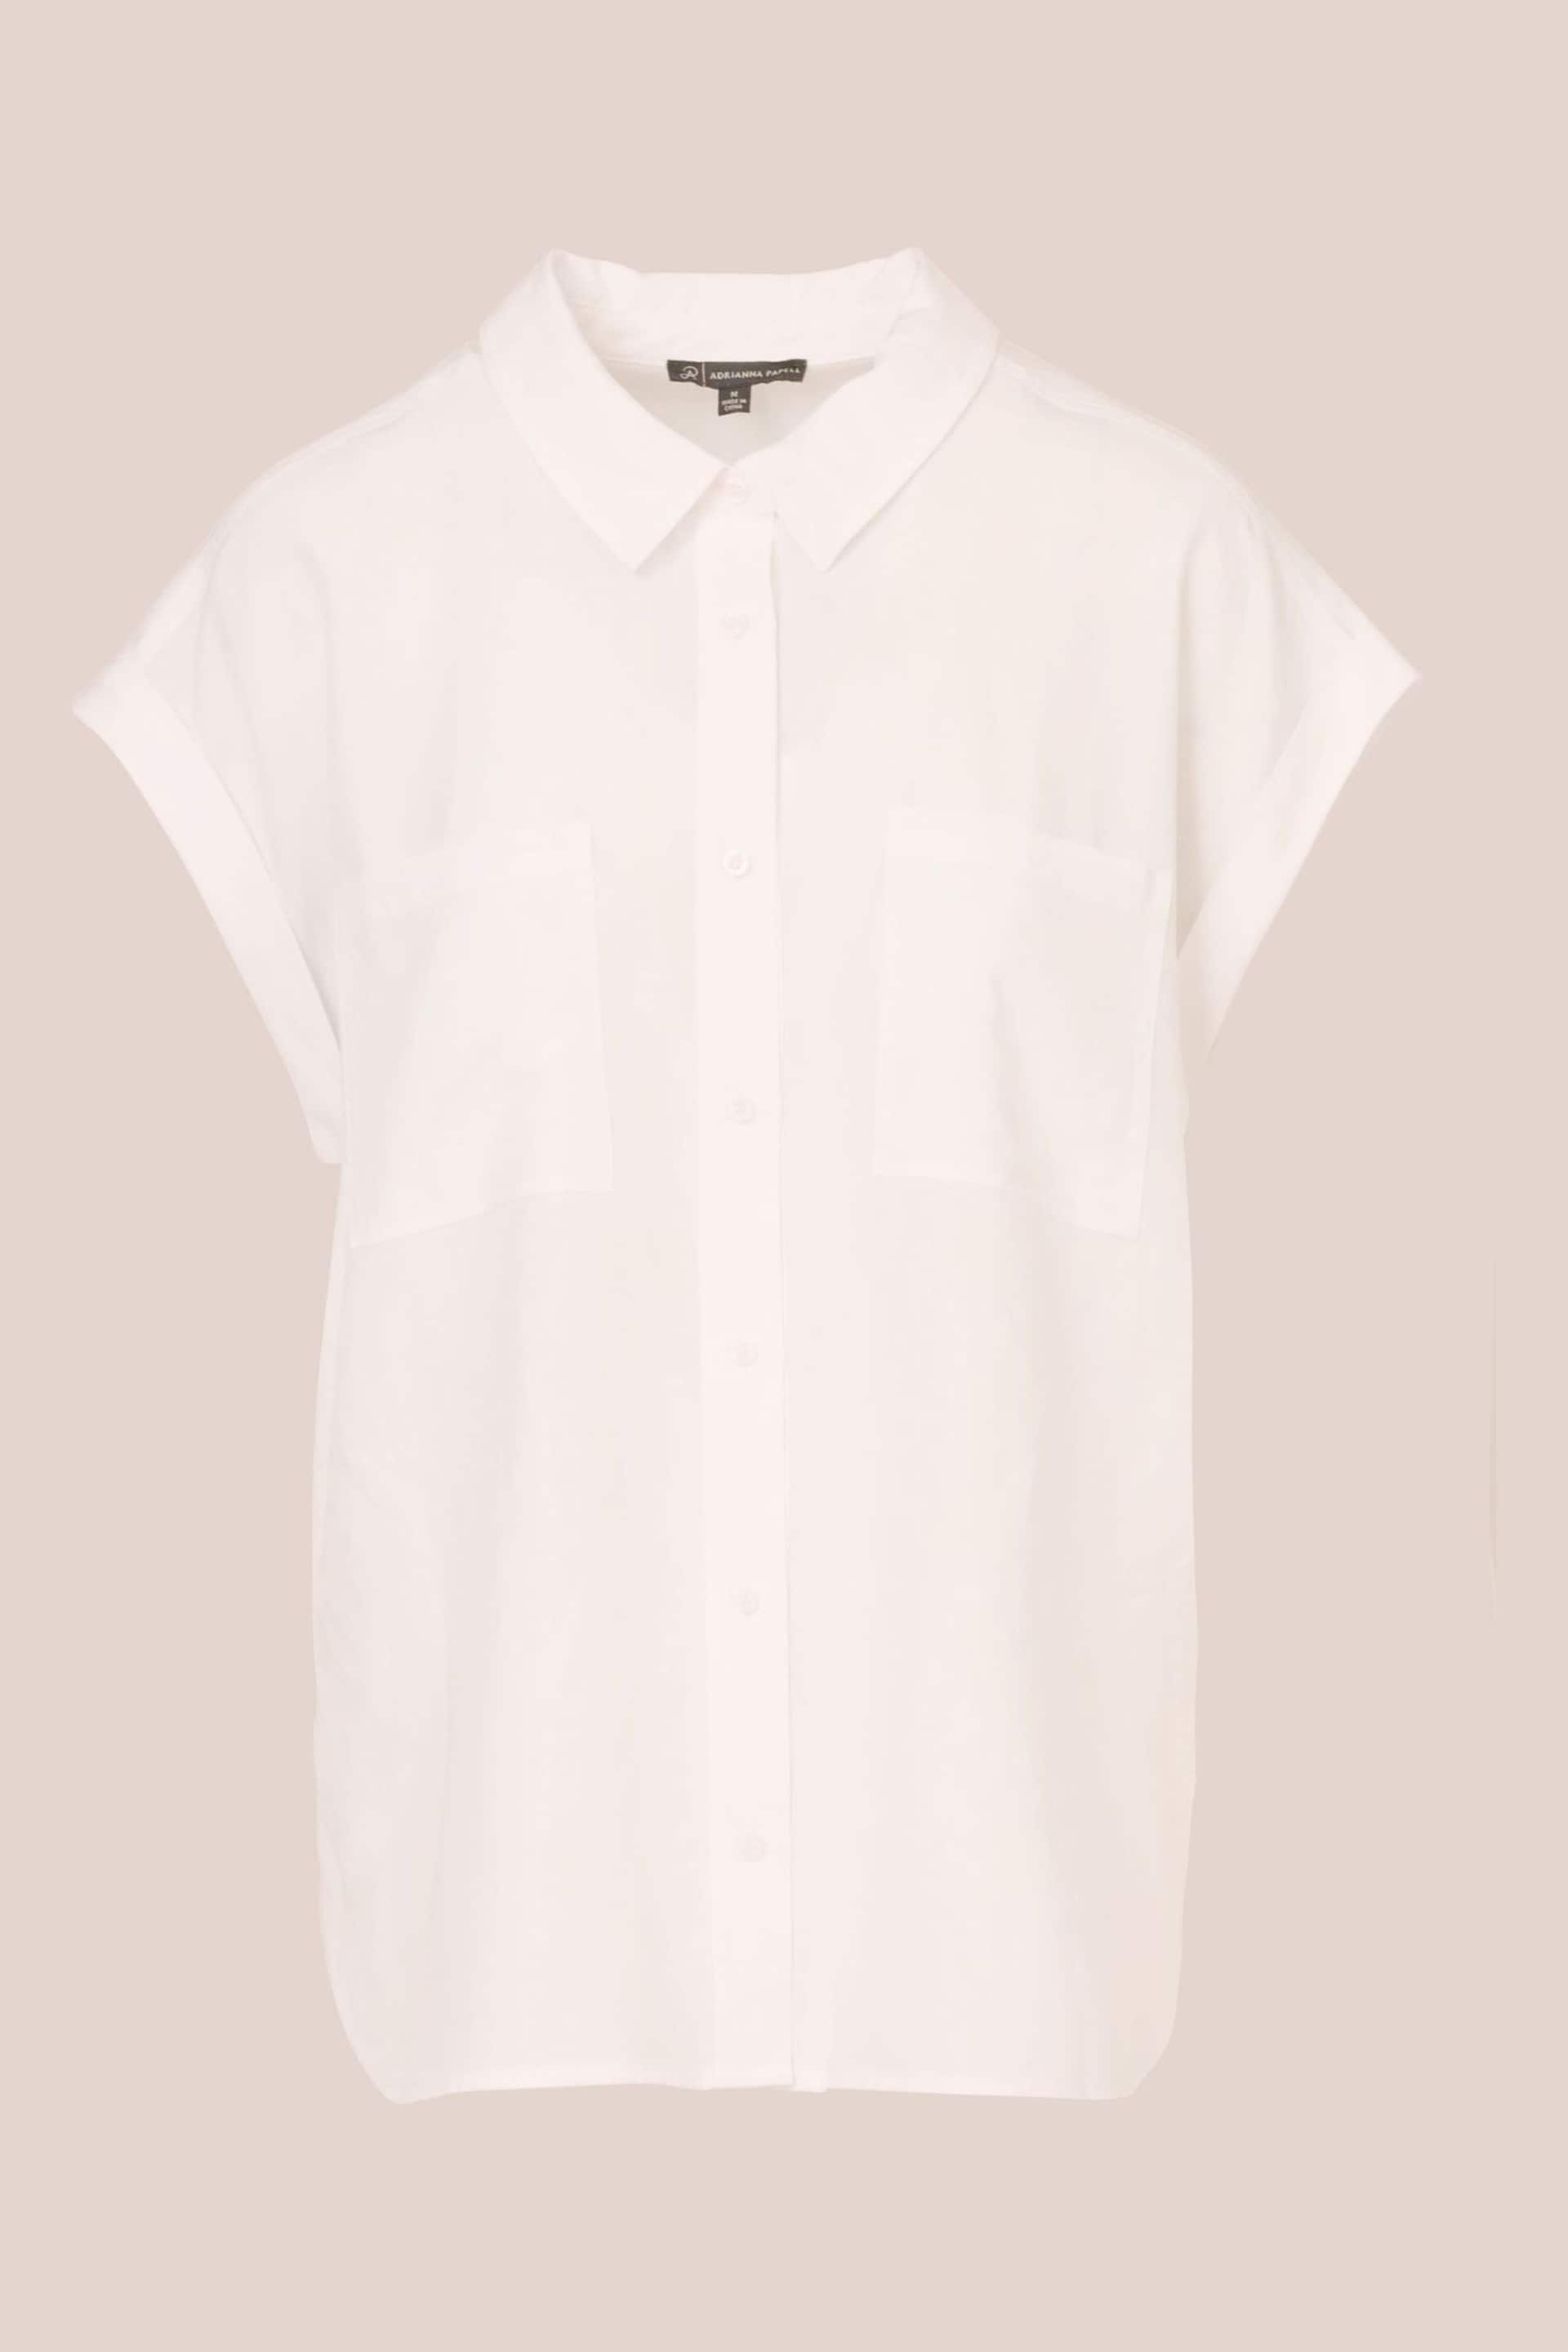 Adrianna Papell Sleeveless Woven Utility White Shirt - Image 7 of 7